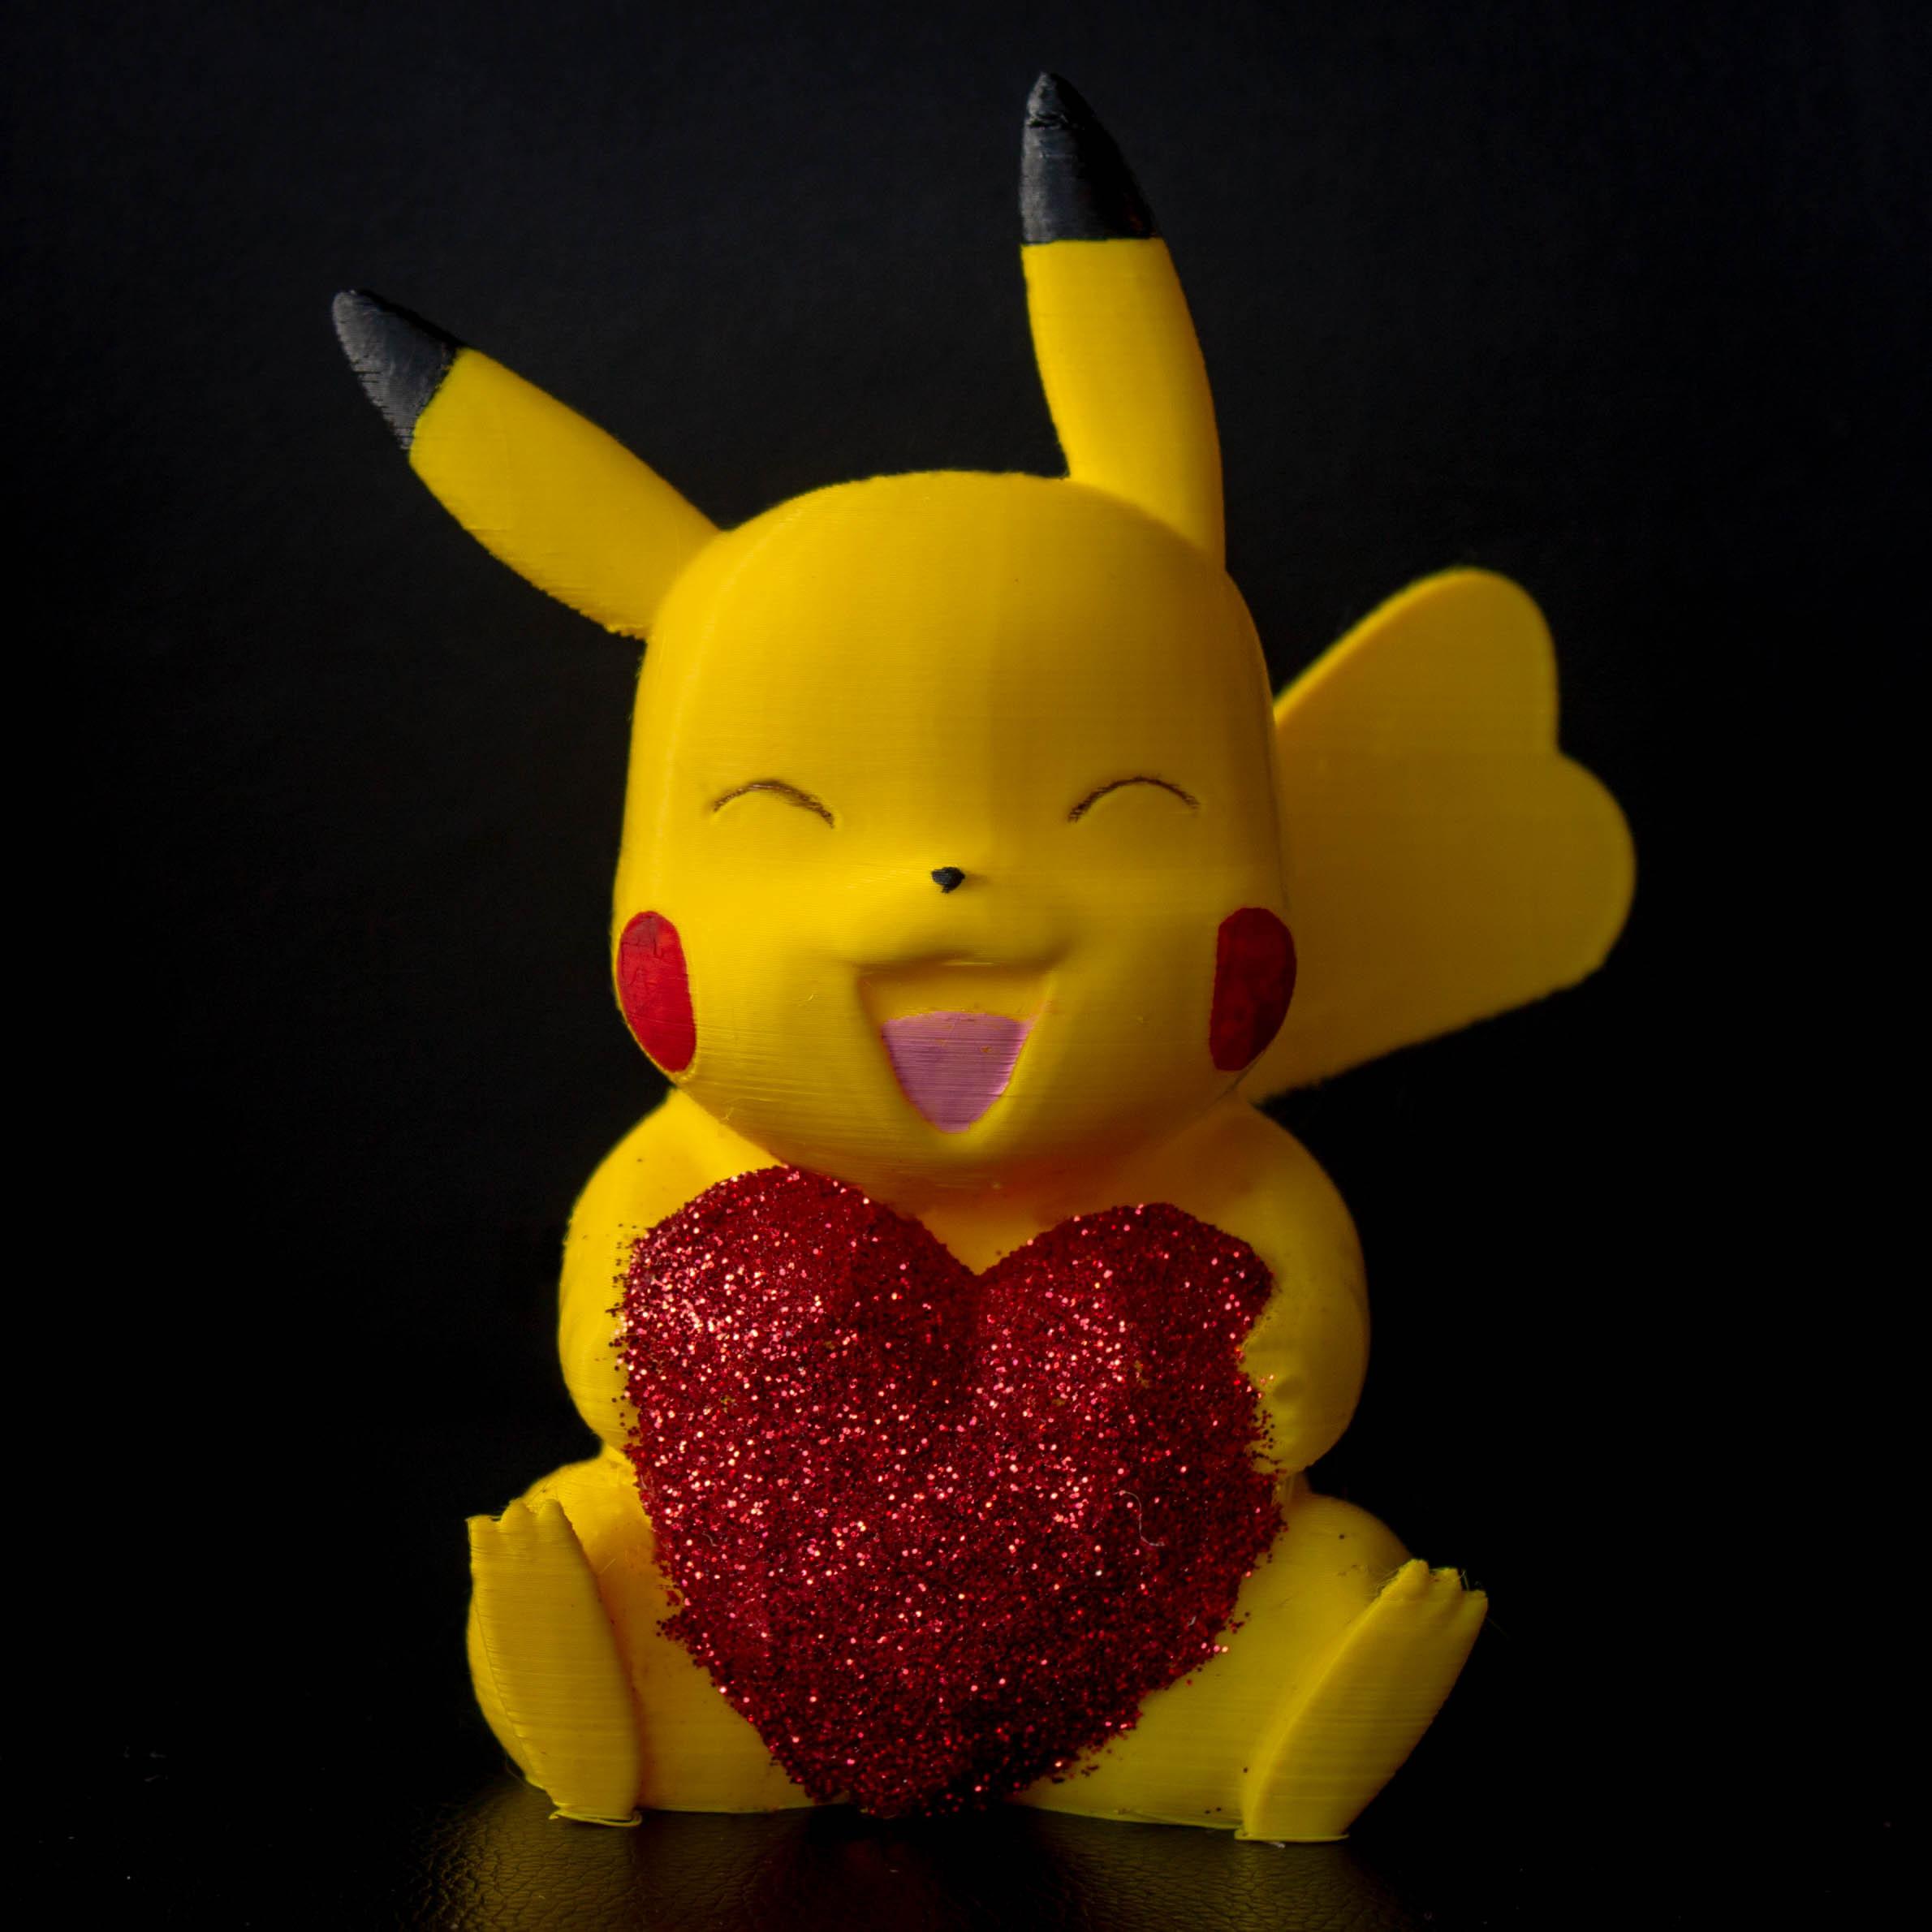 Pikachu(Pokémon) - it's the month of ♥️
🧵 esun 3d filament 
🖨️ Creality ender 3 pro w/ capricorn tube
💾 Patrickart.hk @Thangs3D 
🧩 assist: shylene - 3d model